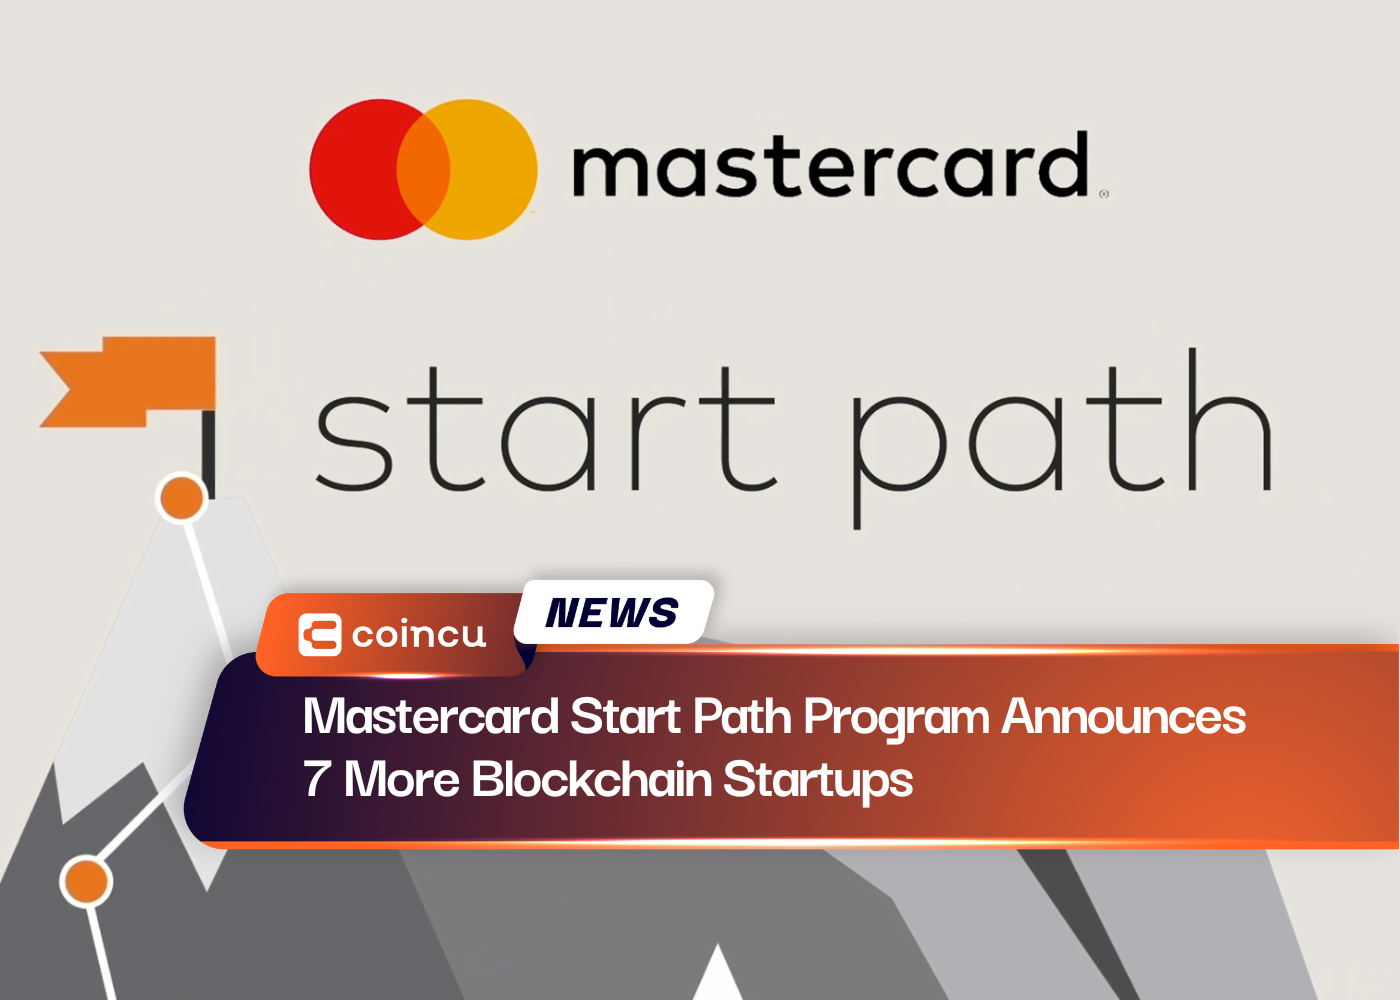 Mastercard Start Path Program Announces 7 More Blockchain Startups